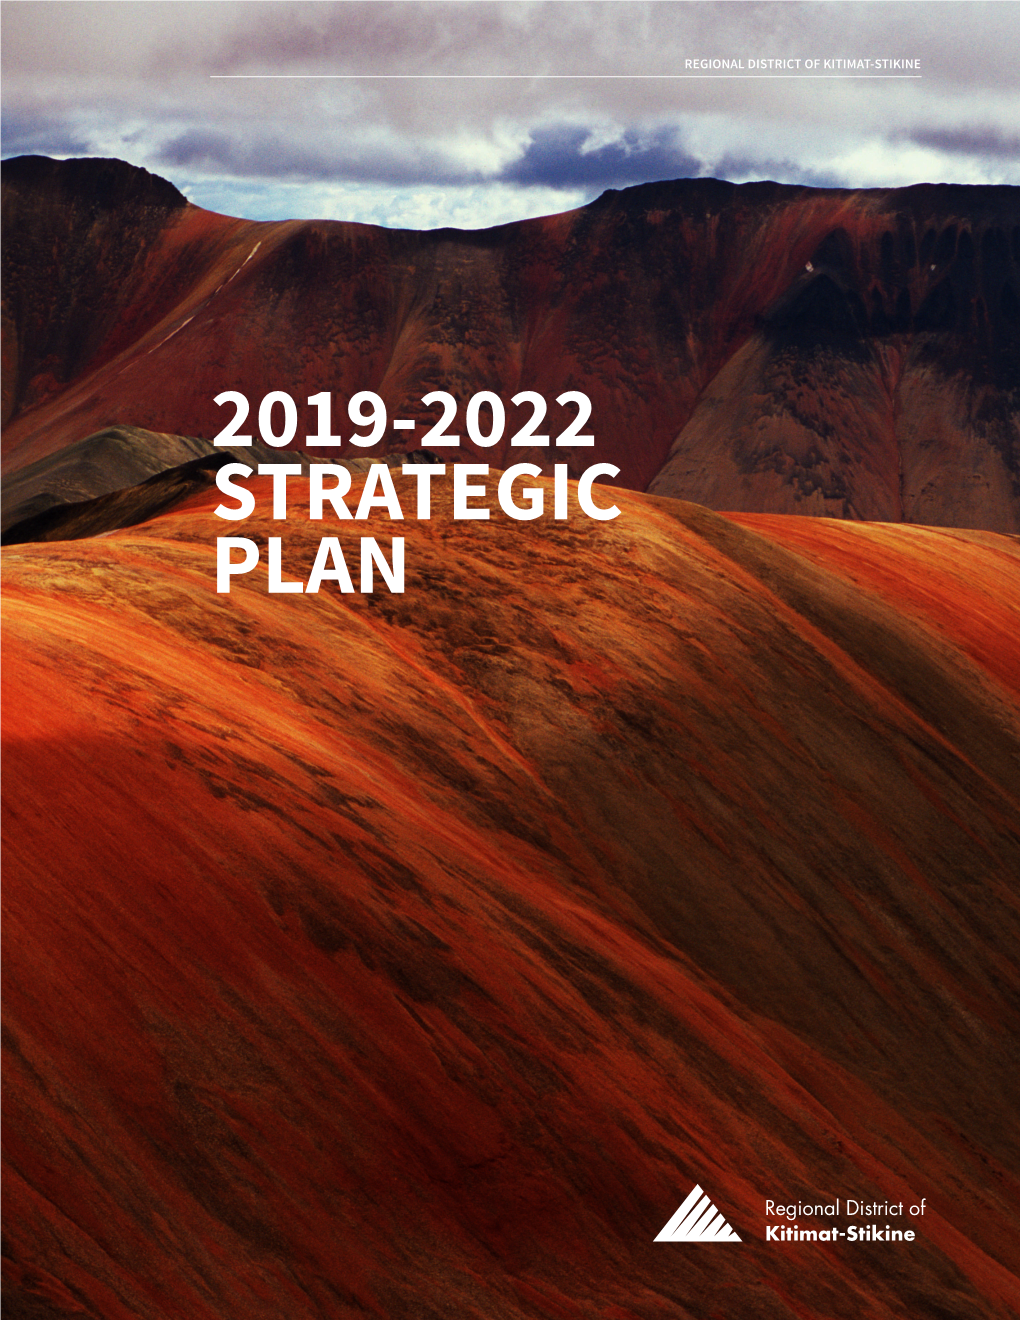 2019-2022 Strategic Plan 2 2019-2022 Rdks Strategic Plan